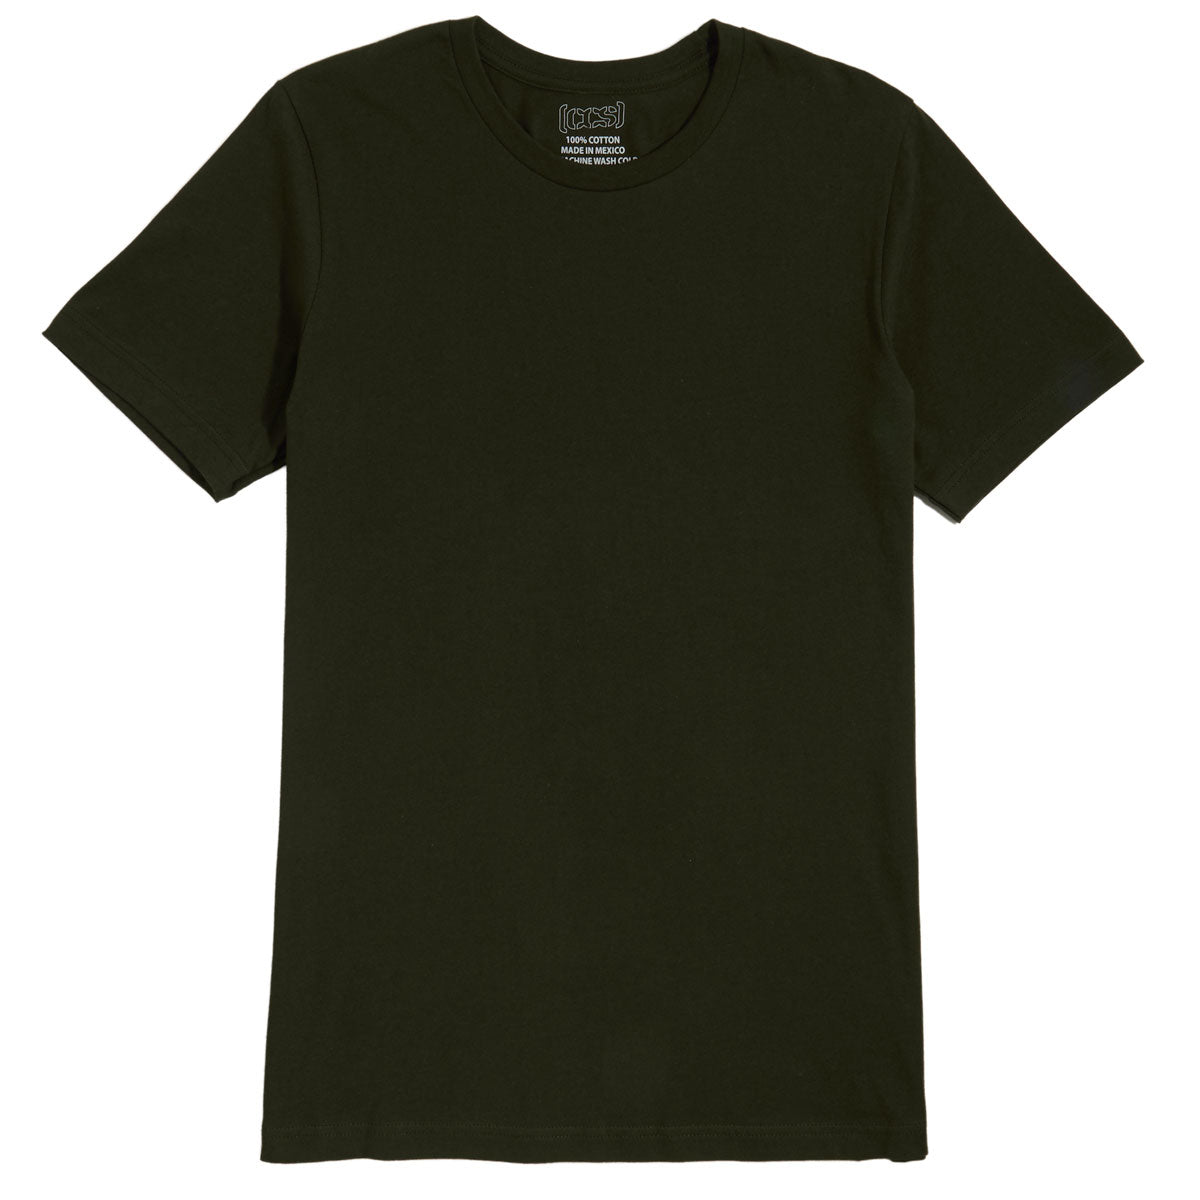 CCS Basis T-Shirt - Dark Olive image 1